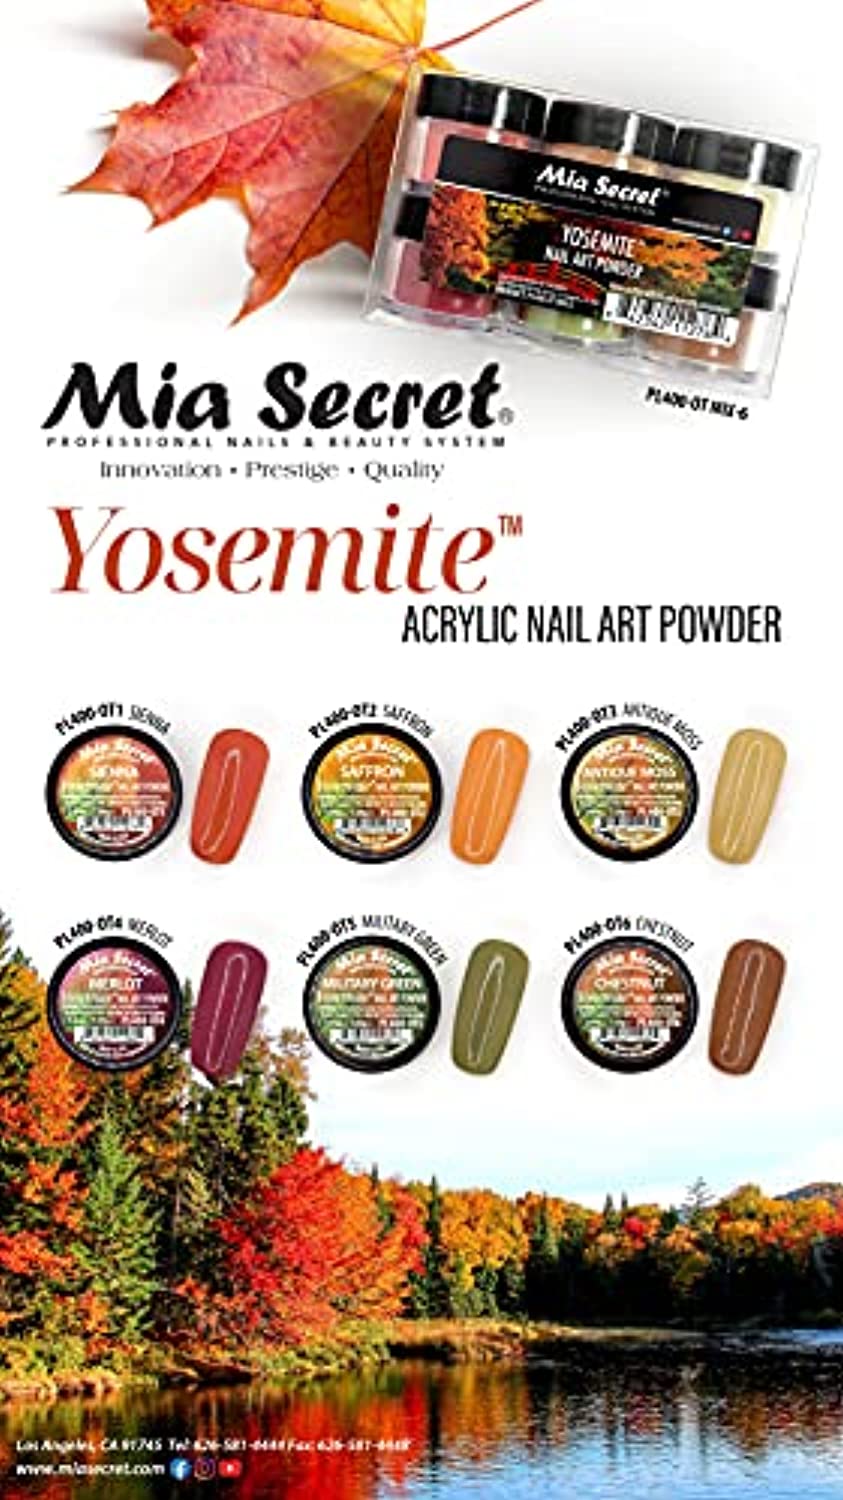 Mia Secret Acryli Powder Collection - Yosemite, 6PCS - Dip Acrylic Powders - Autum/Fall Colors for Acrylic Nails - 6 Piece Acrylic Powders kit - Polvos Acrilicos de U?as con Colores de Oto?o